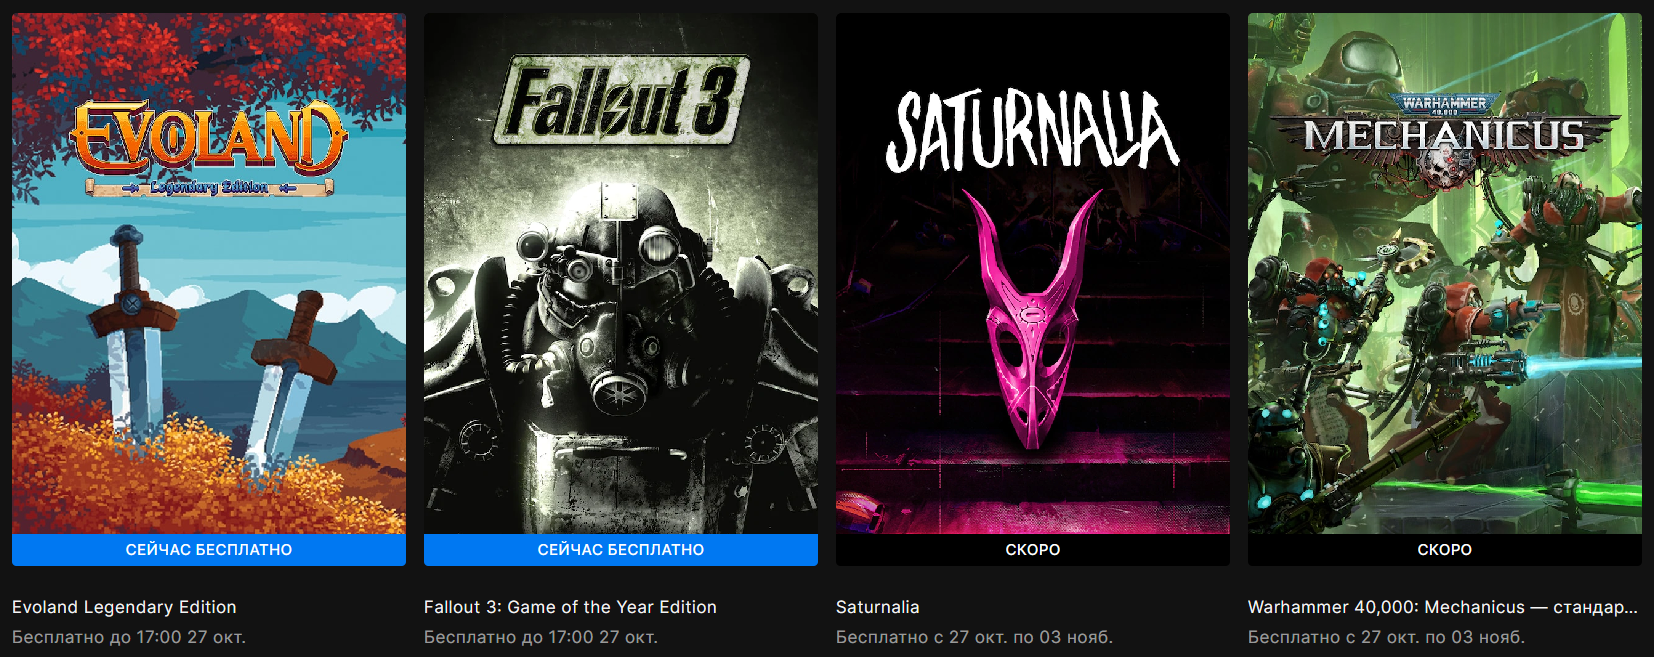 Fallout Epic games. Эволенд 3. Игра Evoland. Fallout 3 полное издание с дополнениями.